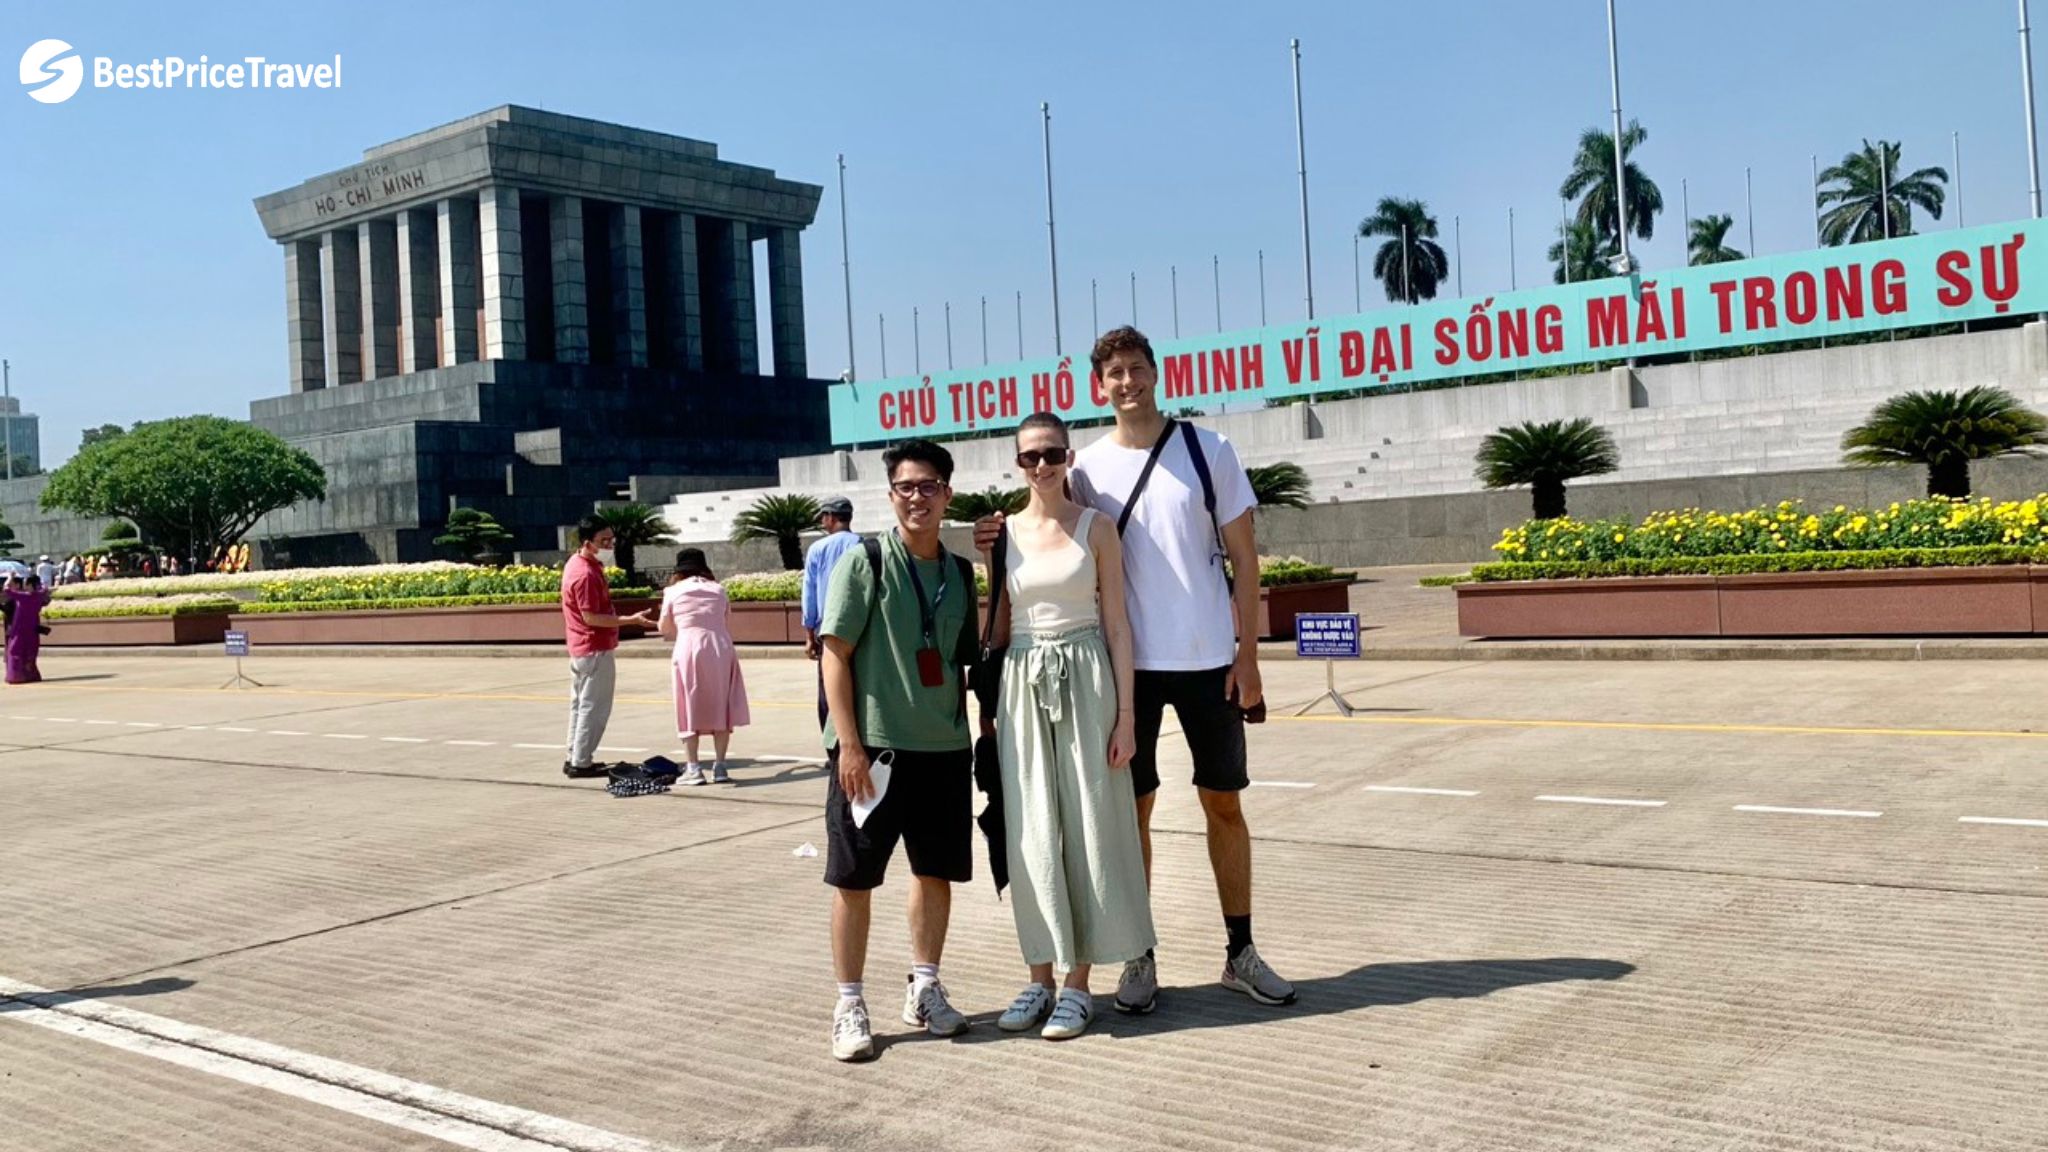 Day 8 Visit The Ho Chi Minh Mausoleum